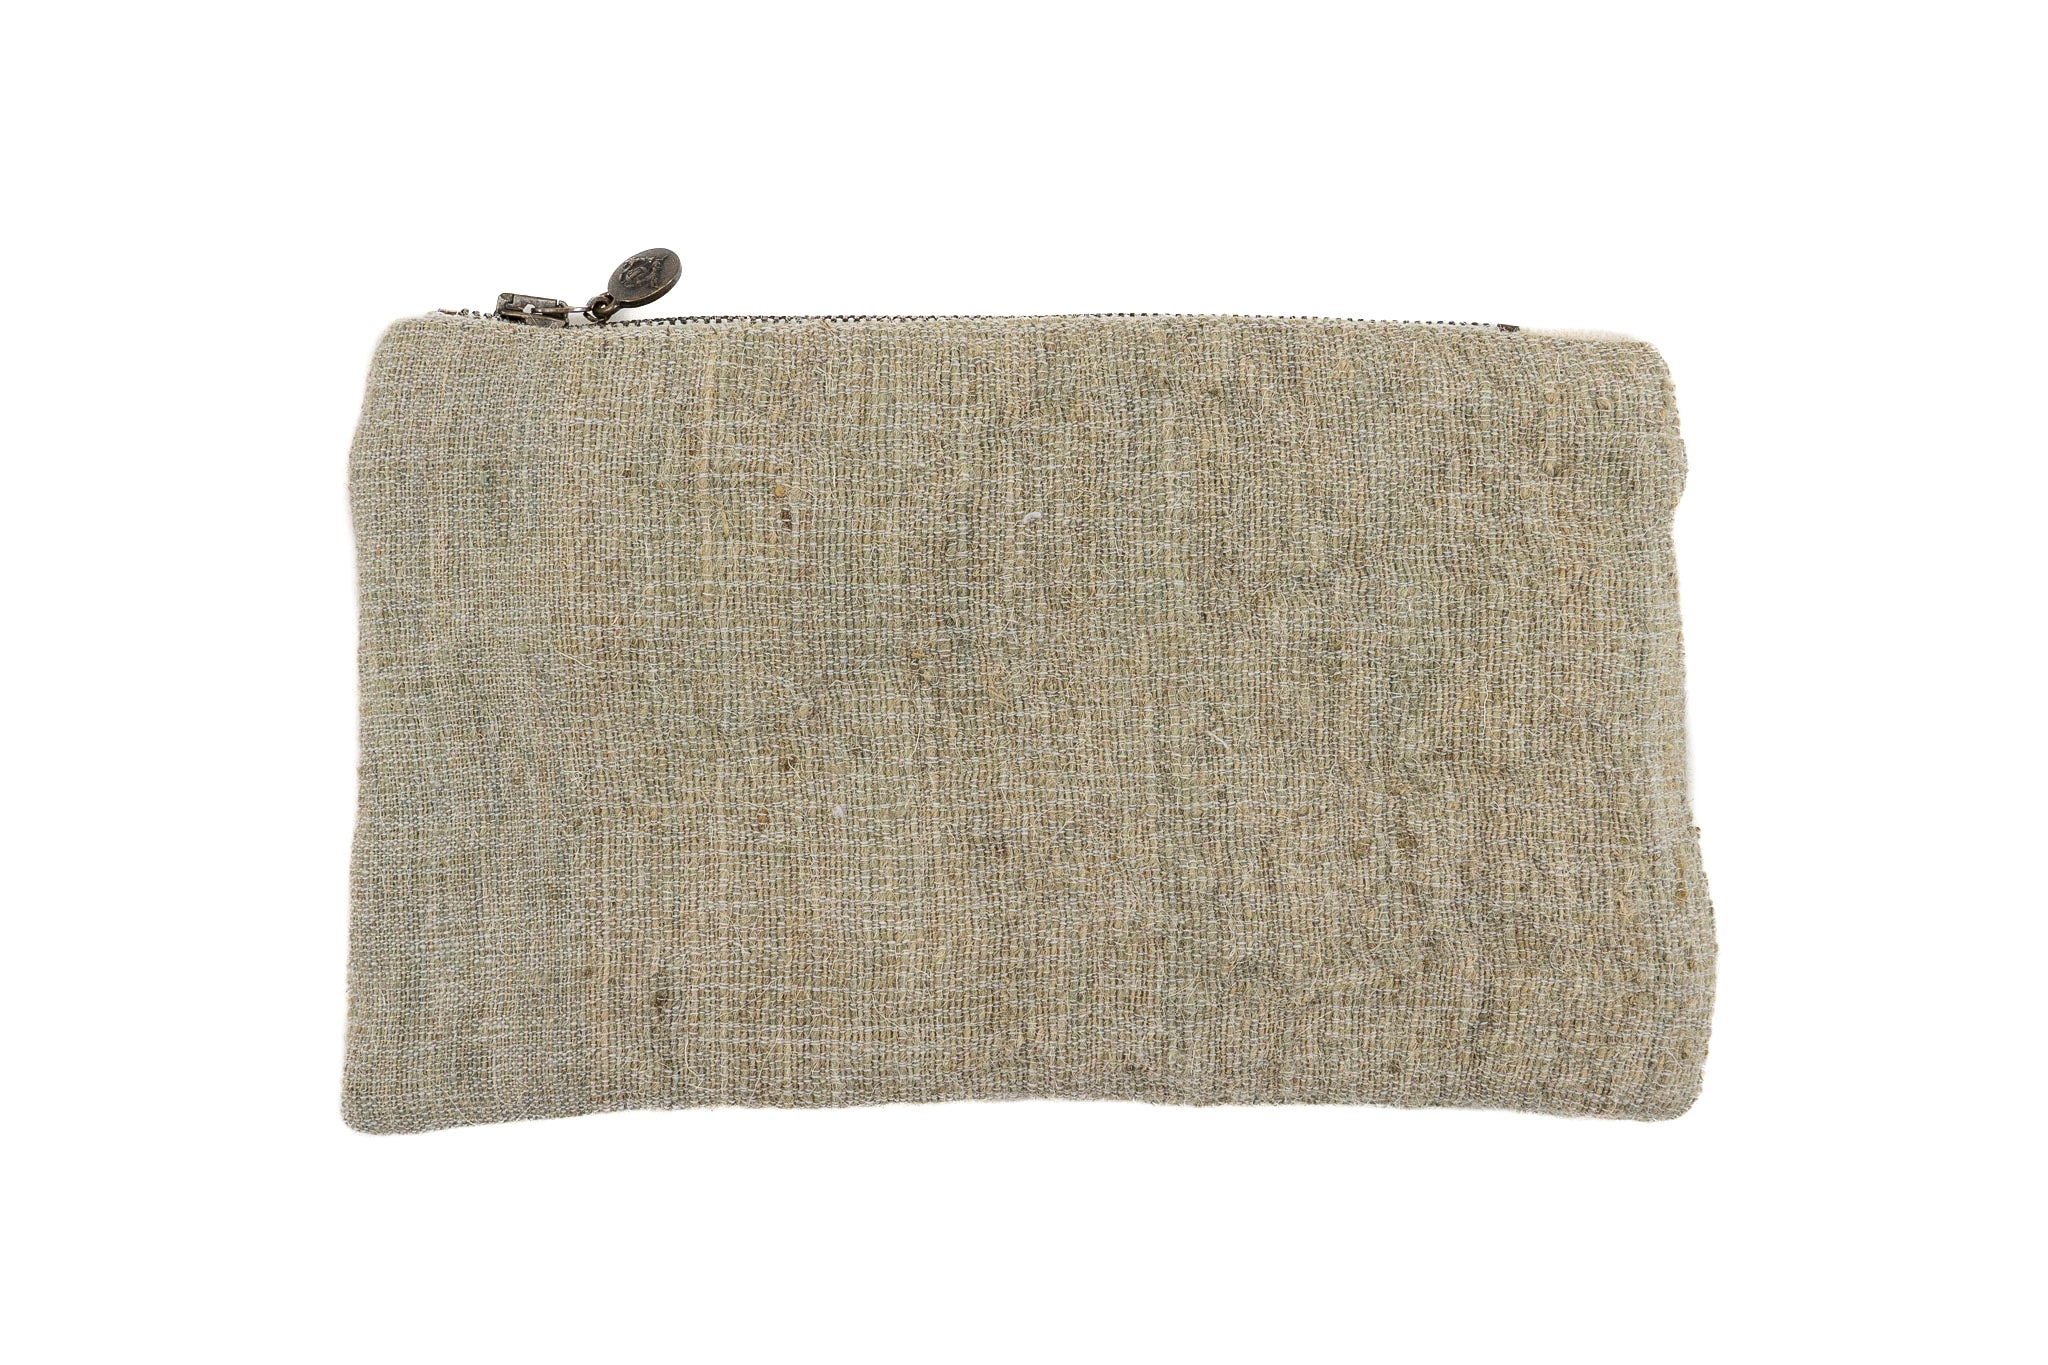 Bag: Handwoven wool, interior handwoven hemp lining - BG67